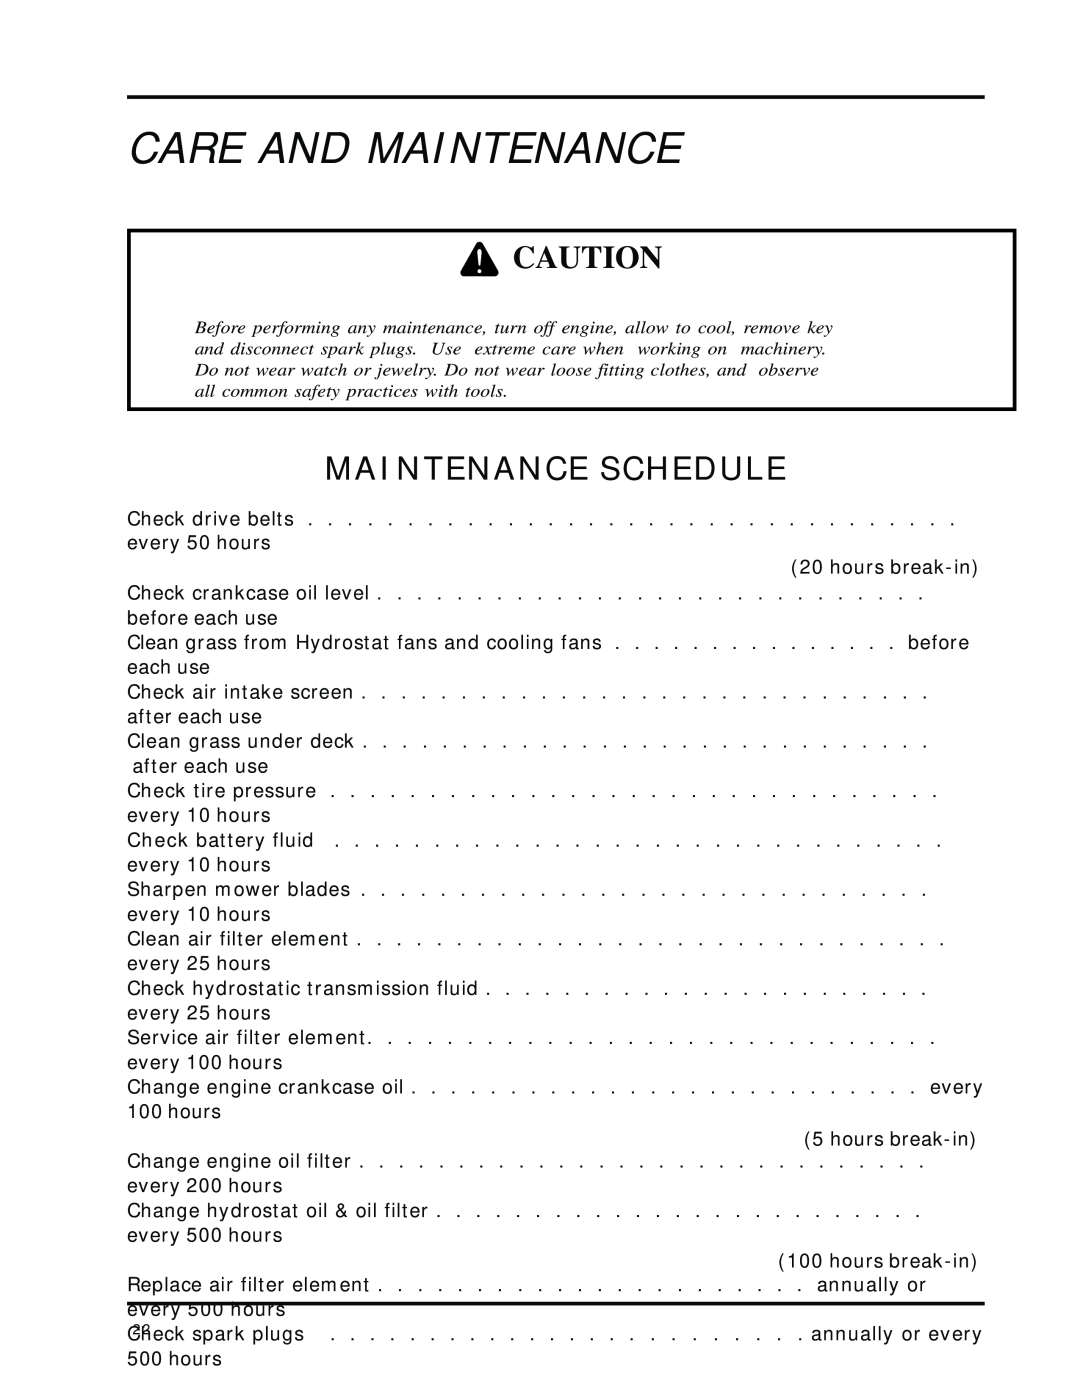 Dixon 8000 Series manual Care And Maintenance, Maintenance Schedule 